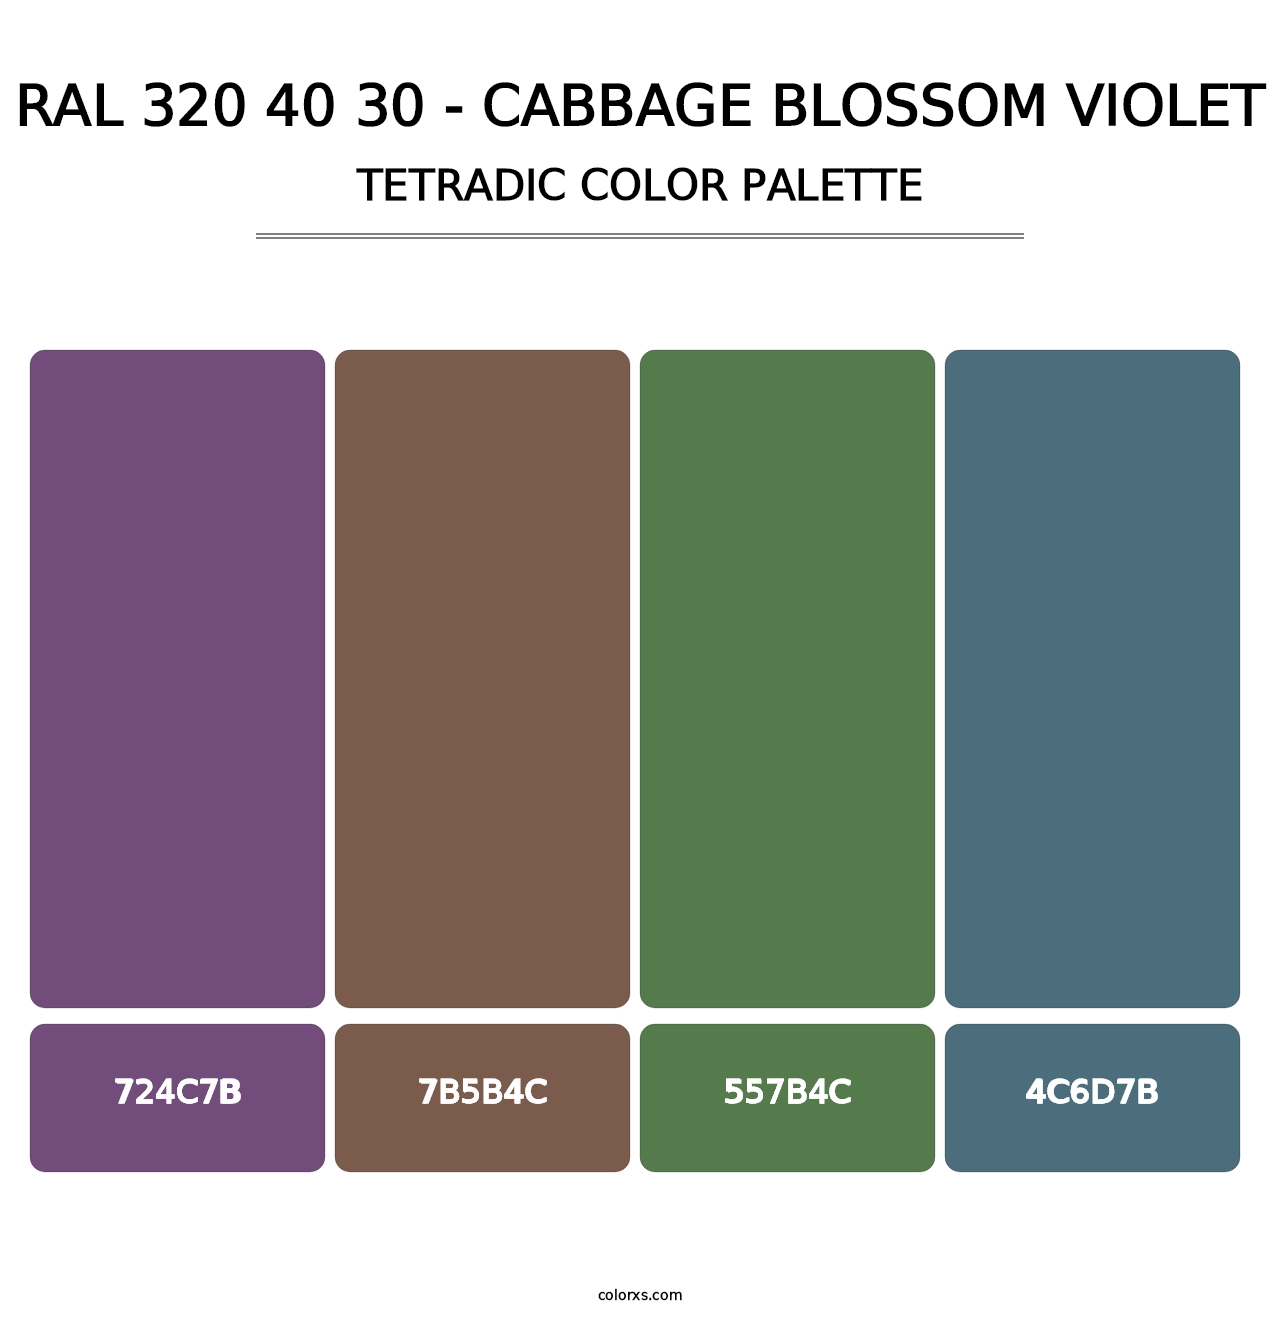 RAL 320 40 30 - Cabbage Blossom Violet - Tetradic Color Palette